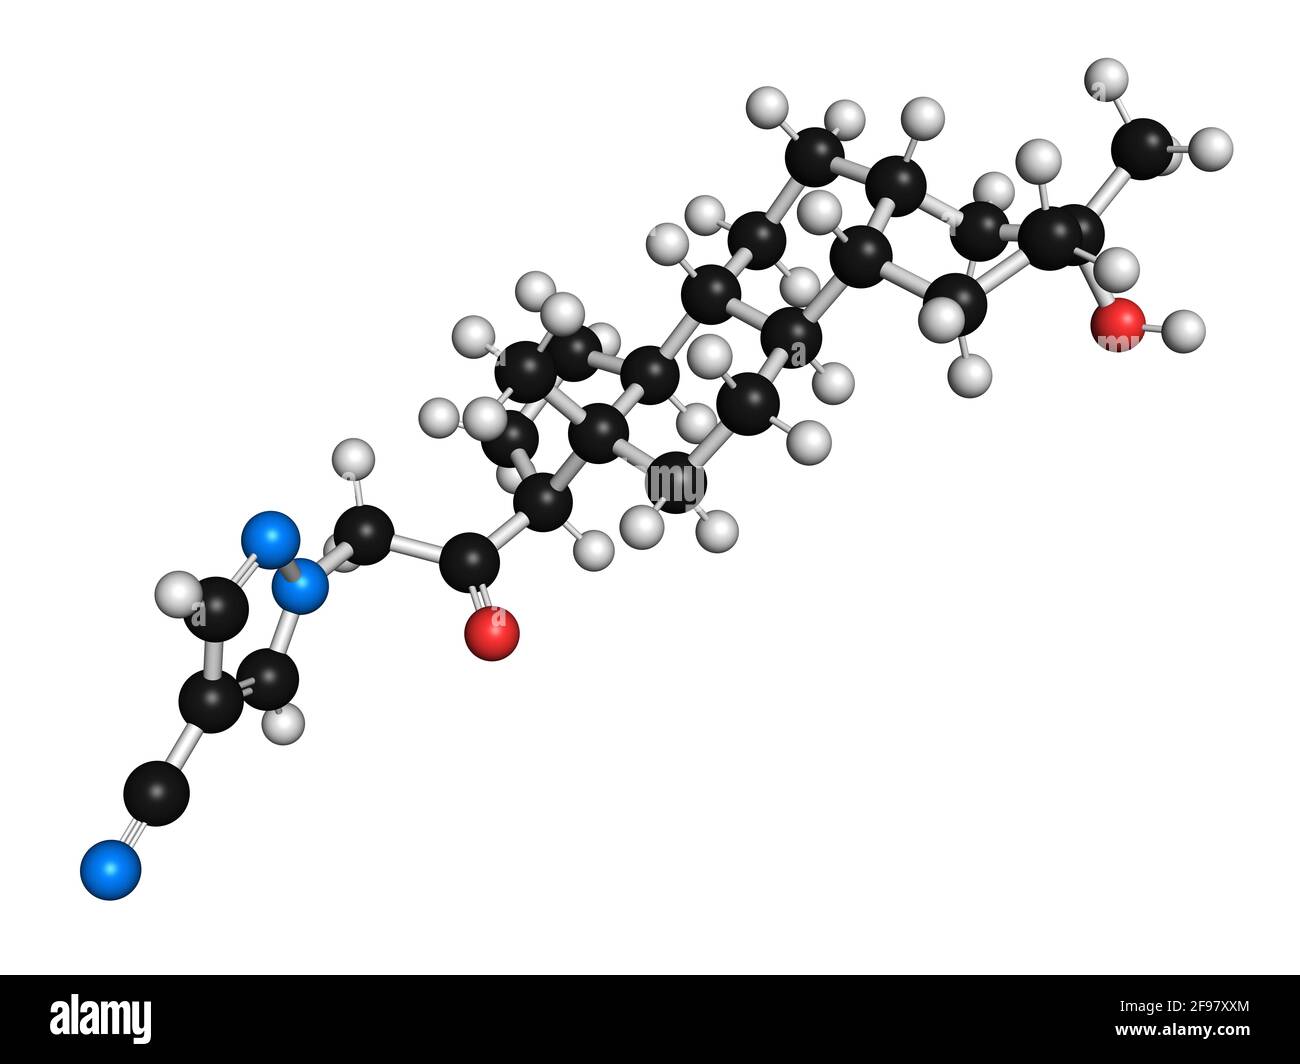 Zuranolone drug molecule, illustration Stock Photo